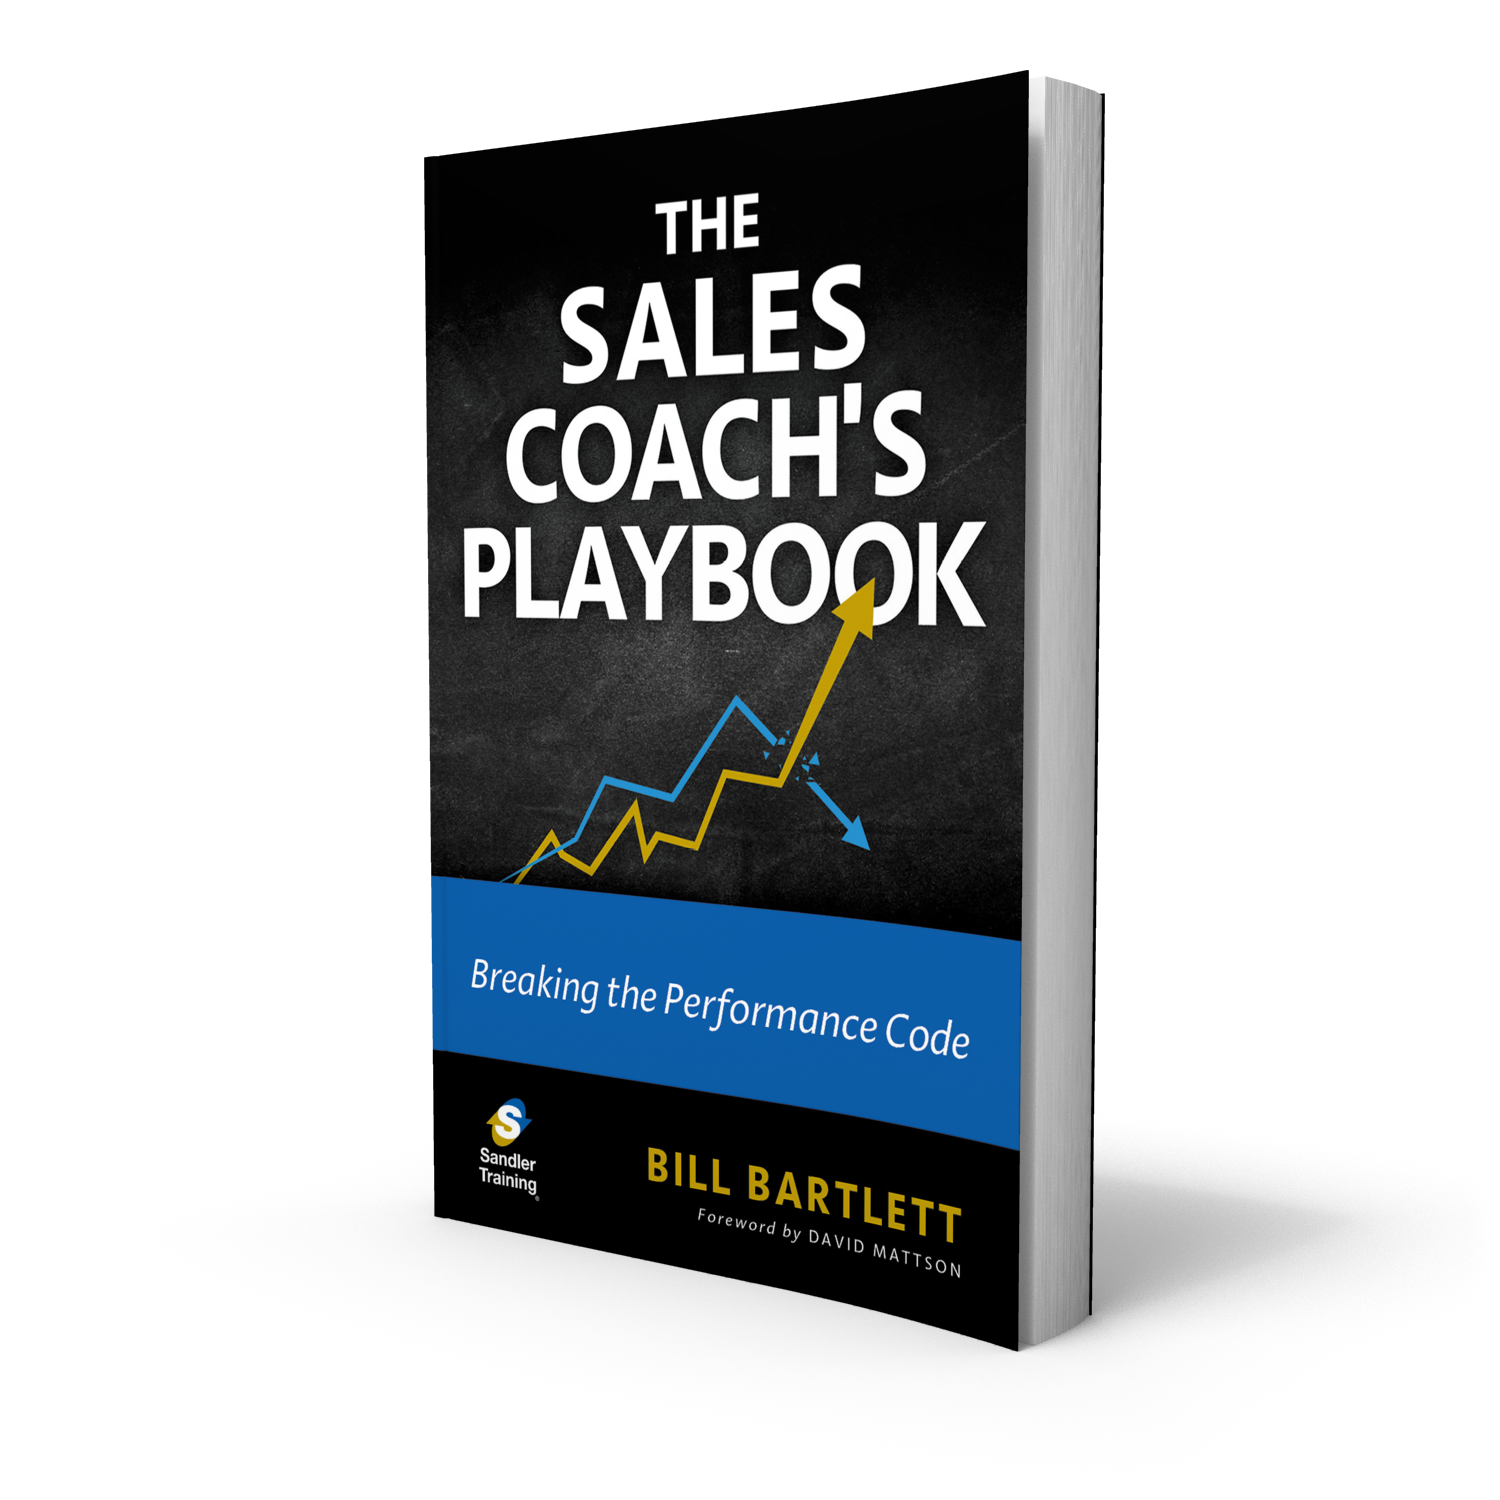 Sales book. The sales book.